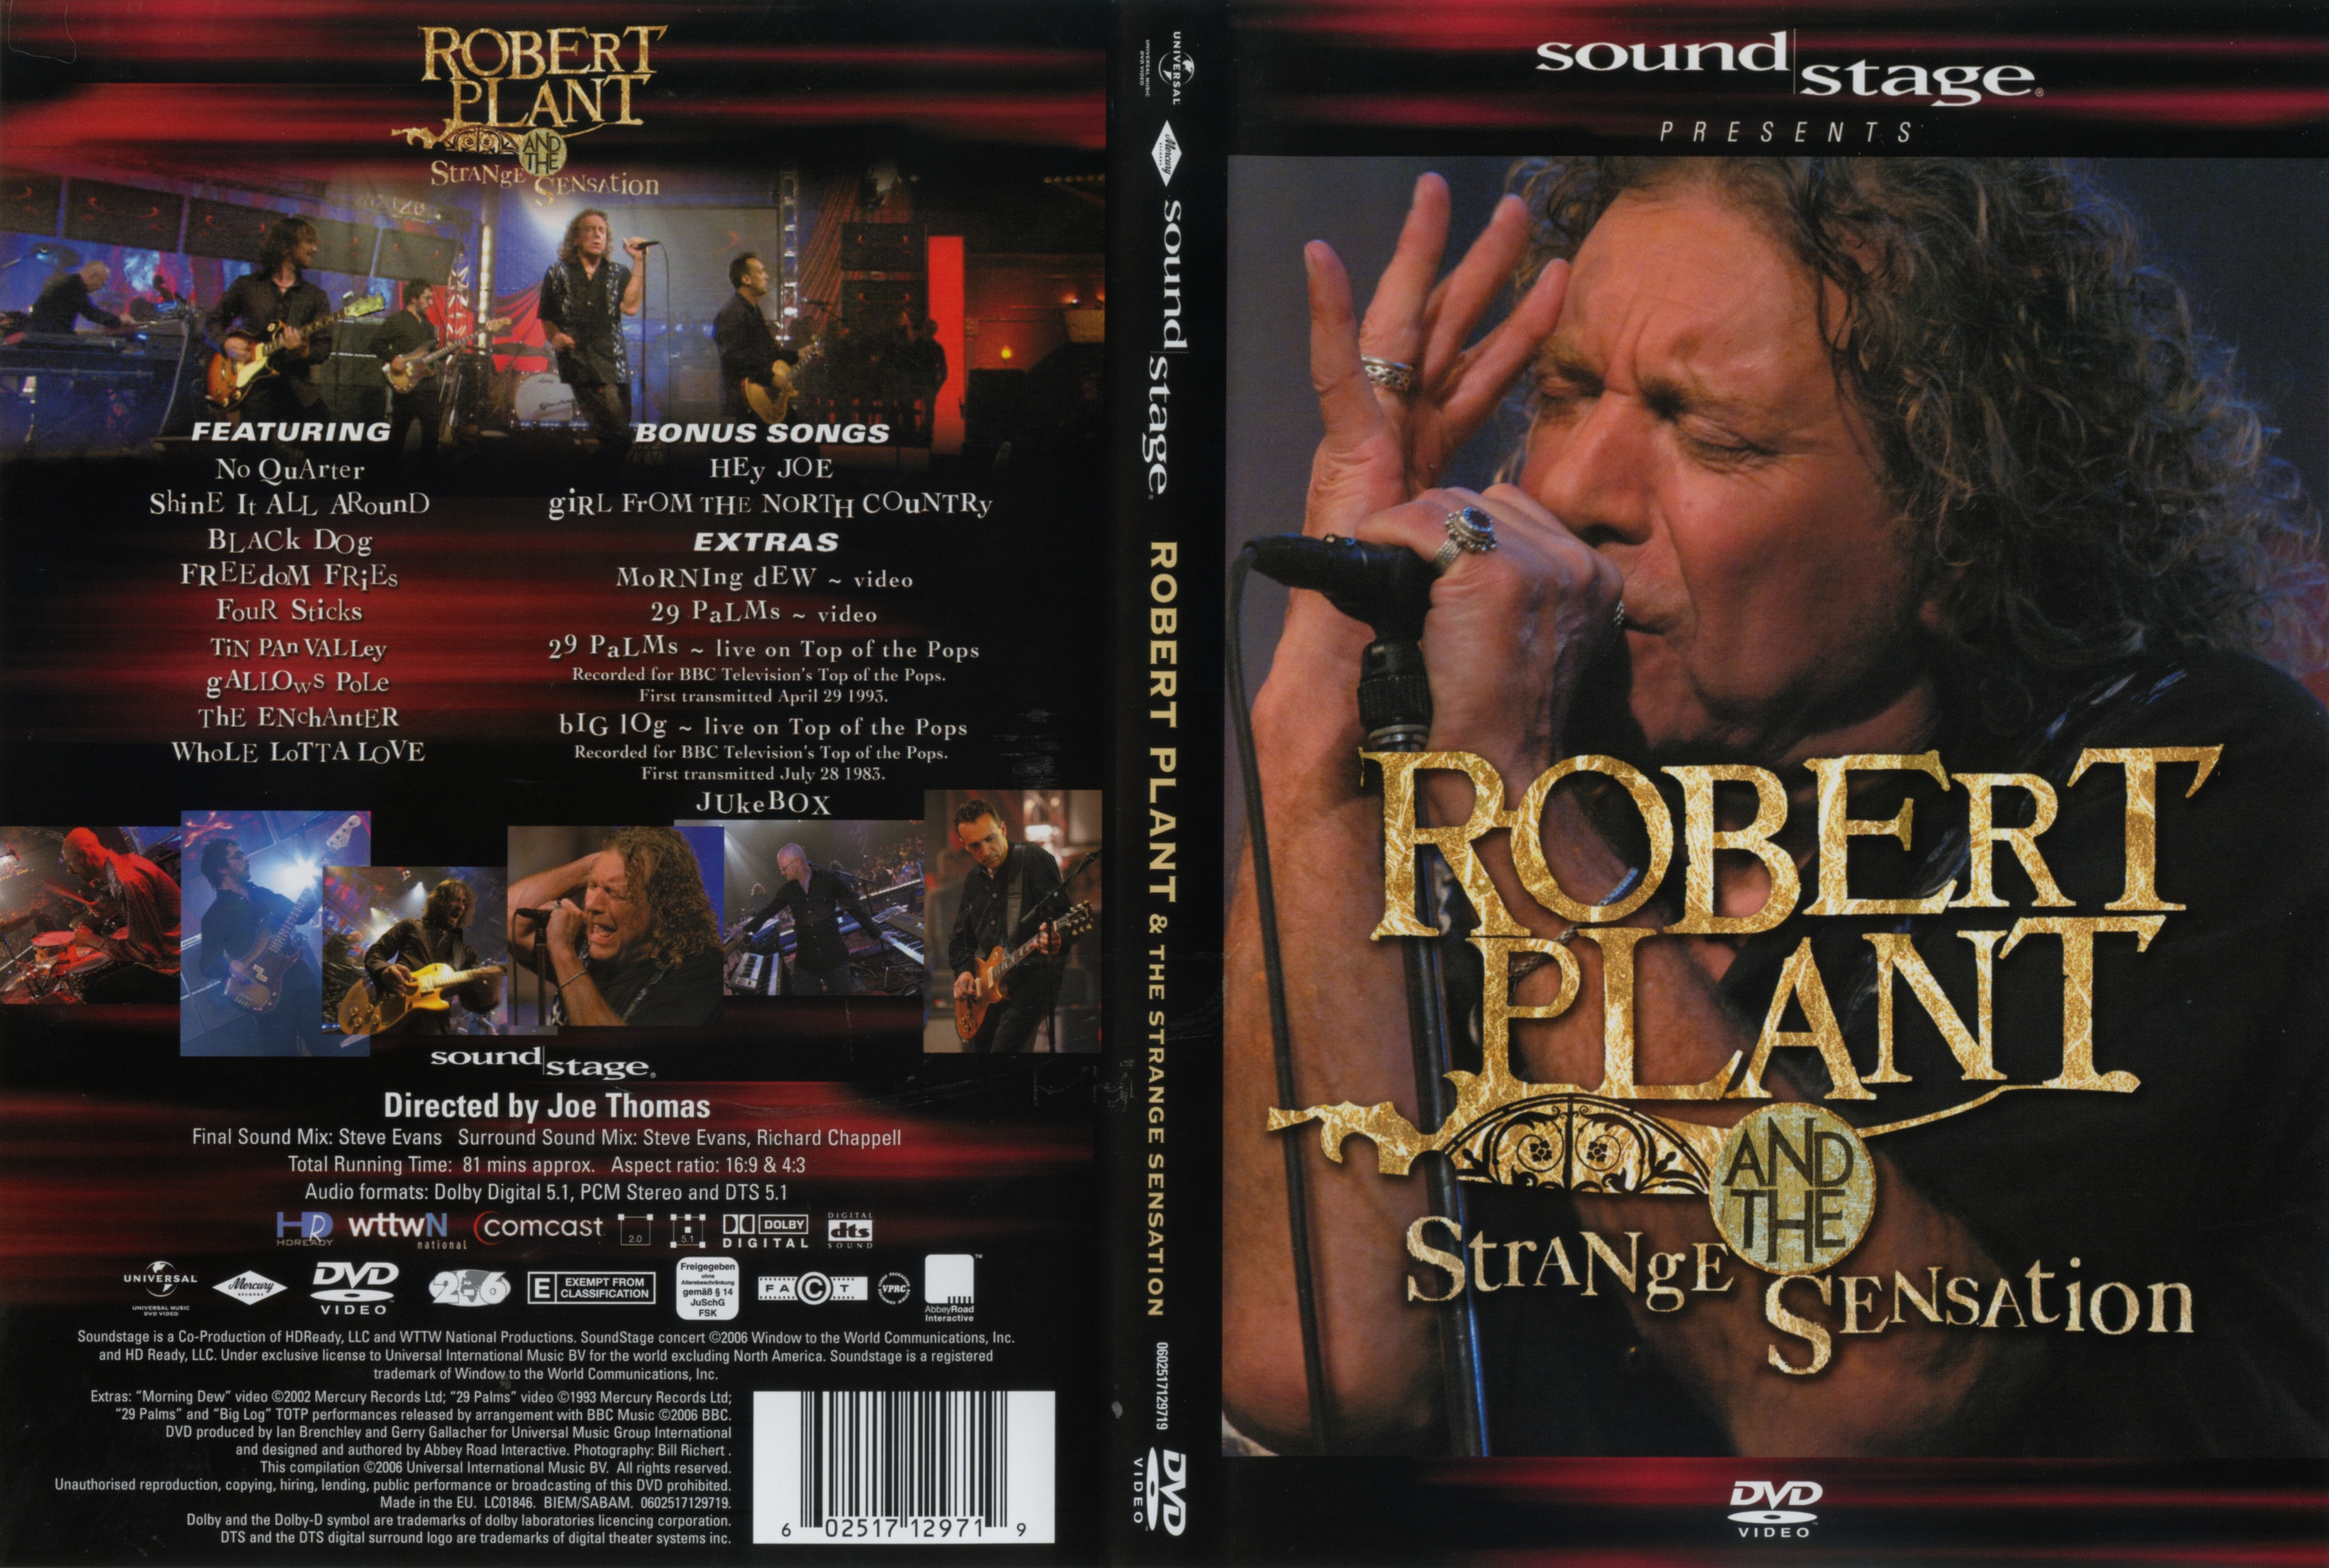 Jaquette DVD Robert Plant and the Strange Sensation